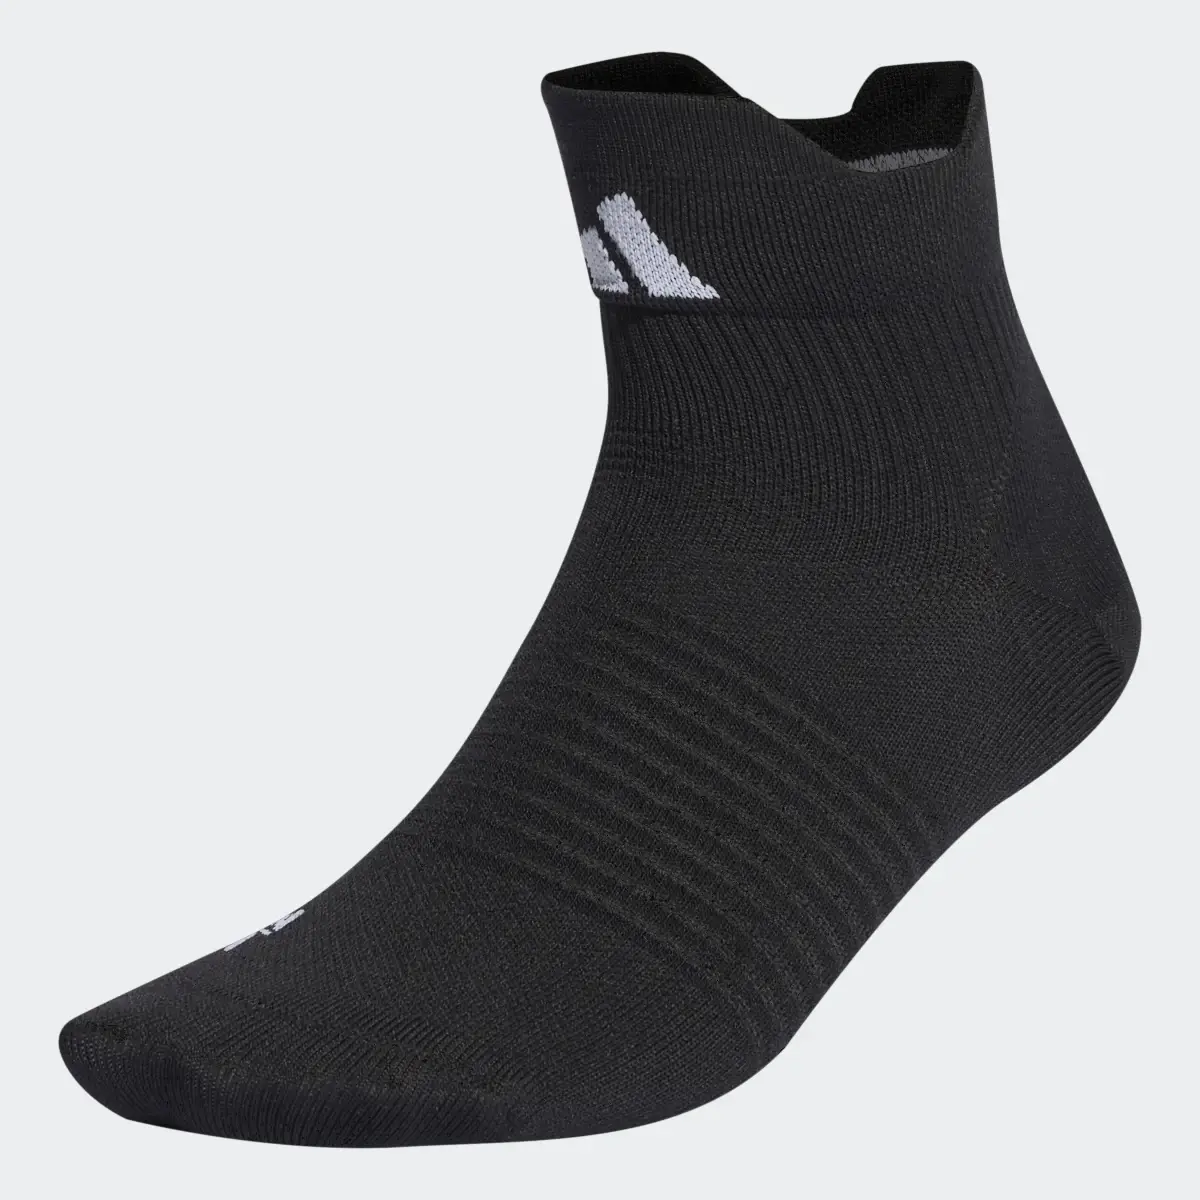 Adidas Performance Designed for Sport Ankle Socks. 1